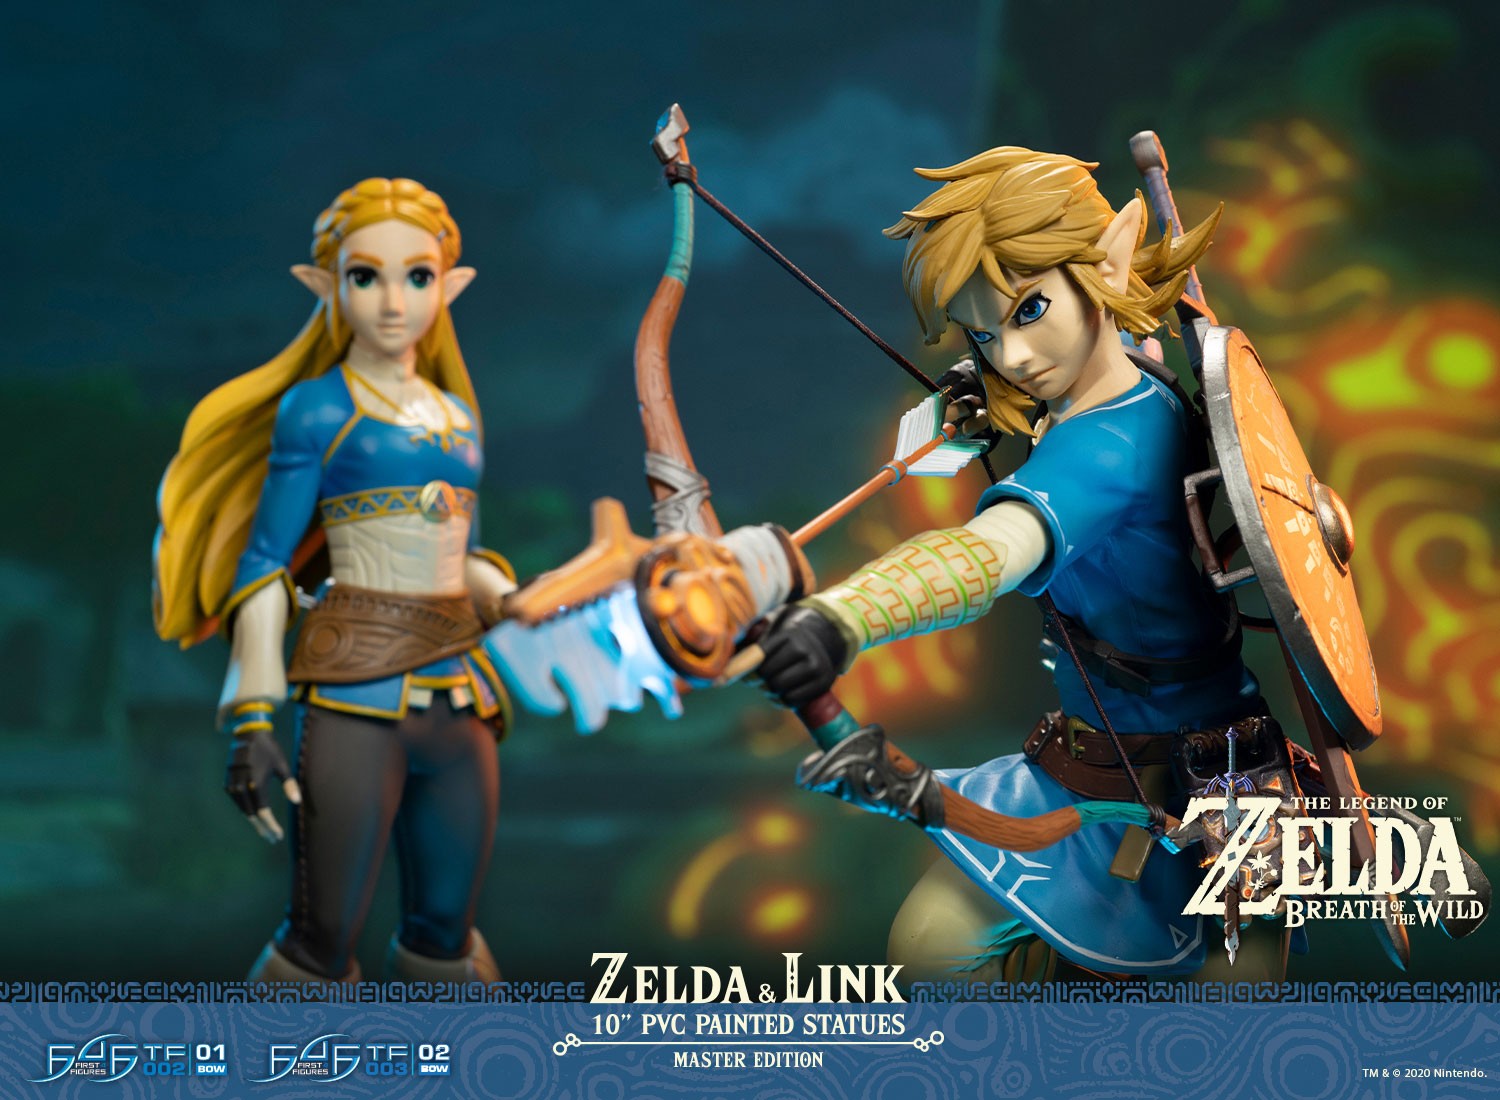 First 4 Figures 10 Inch The Legend of Zelda Breath of The Wild Zelda PVC  Collectible Replica Statue Figurine Toy